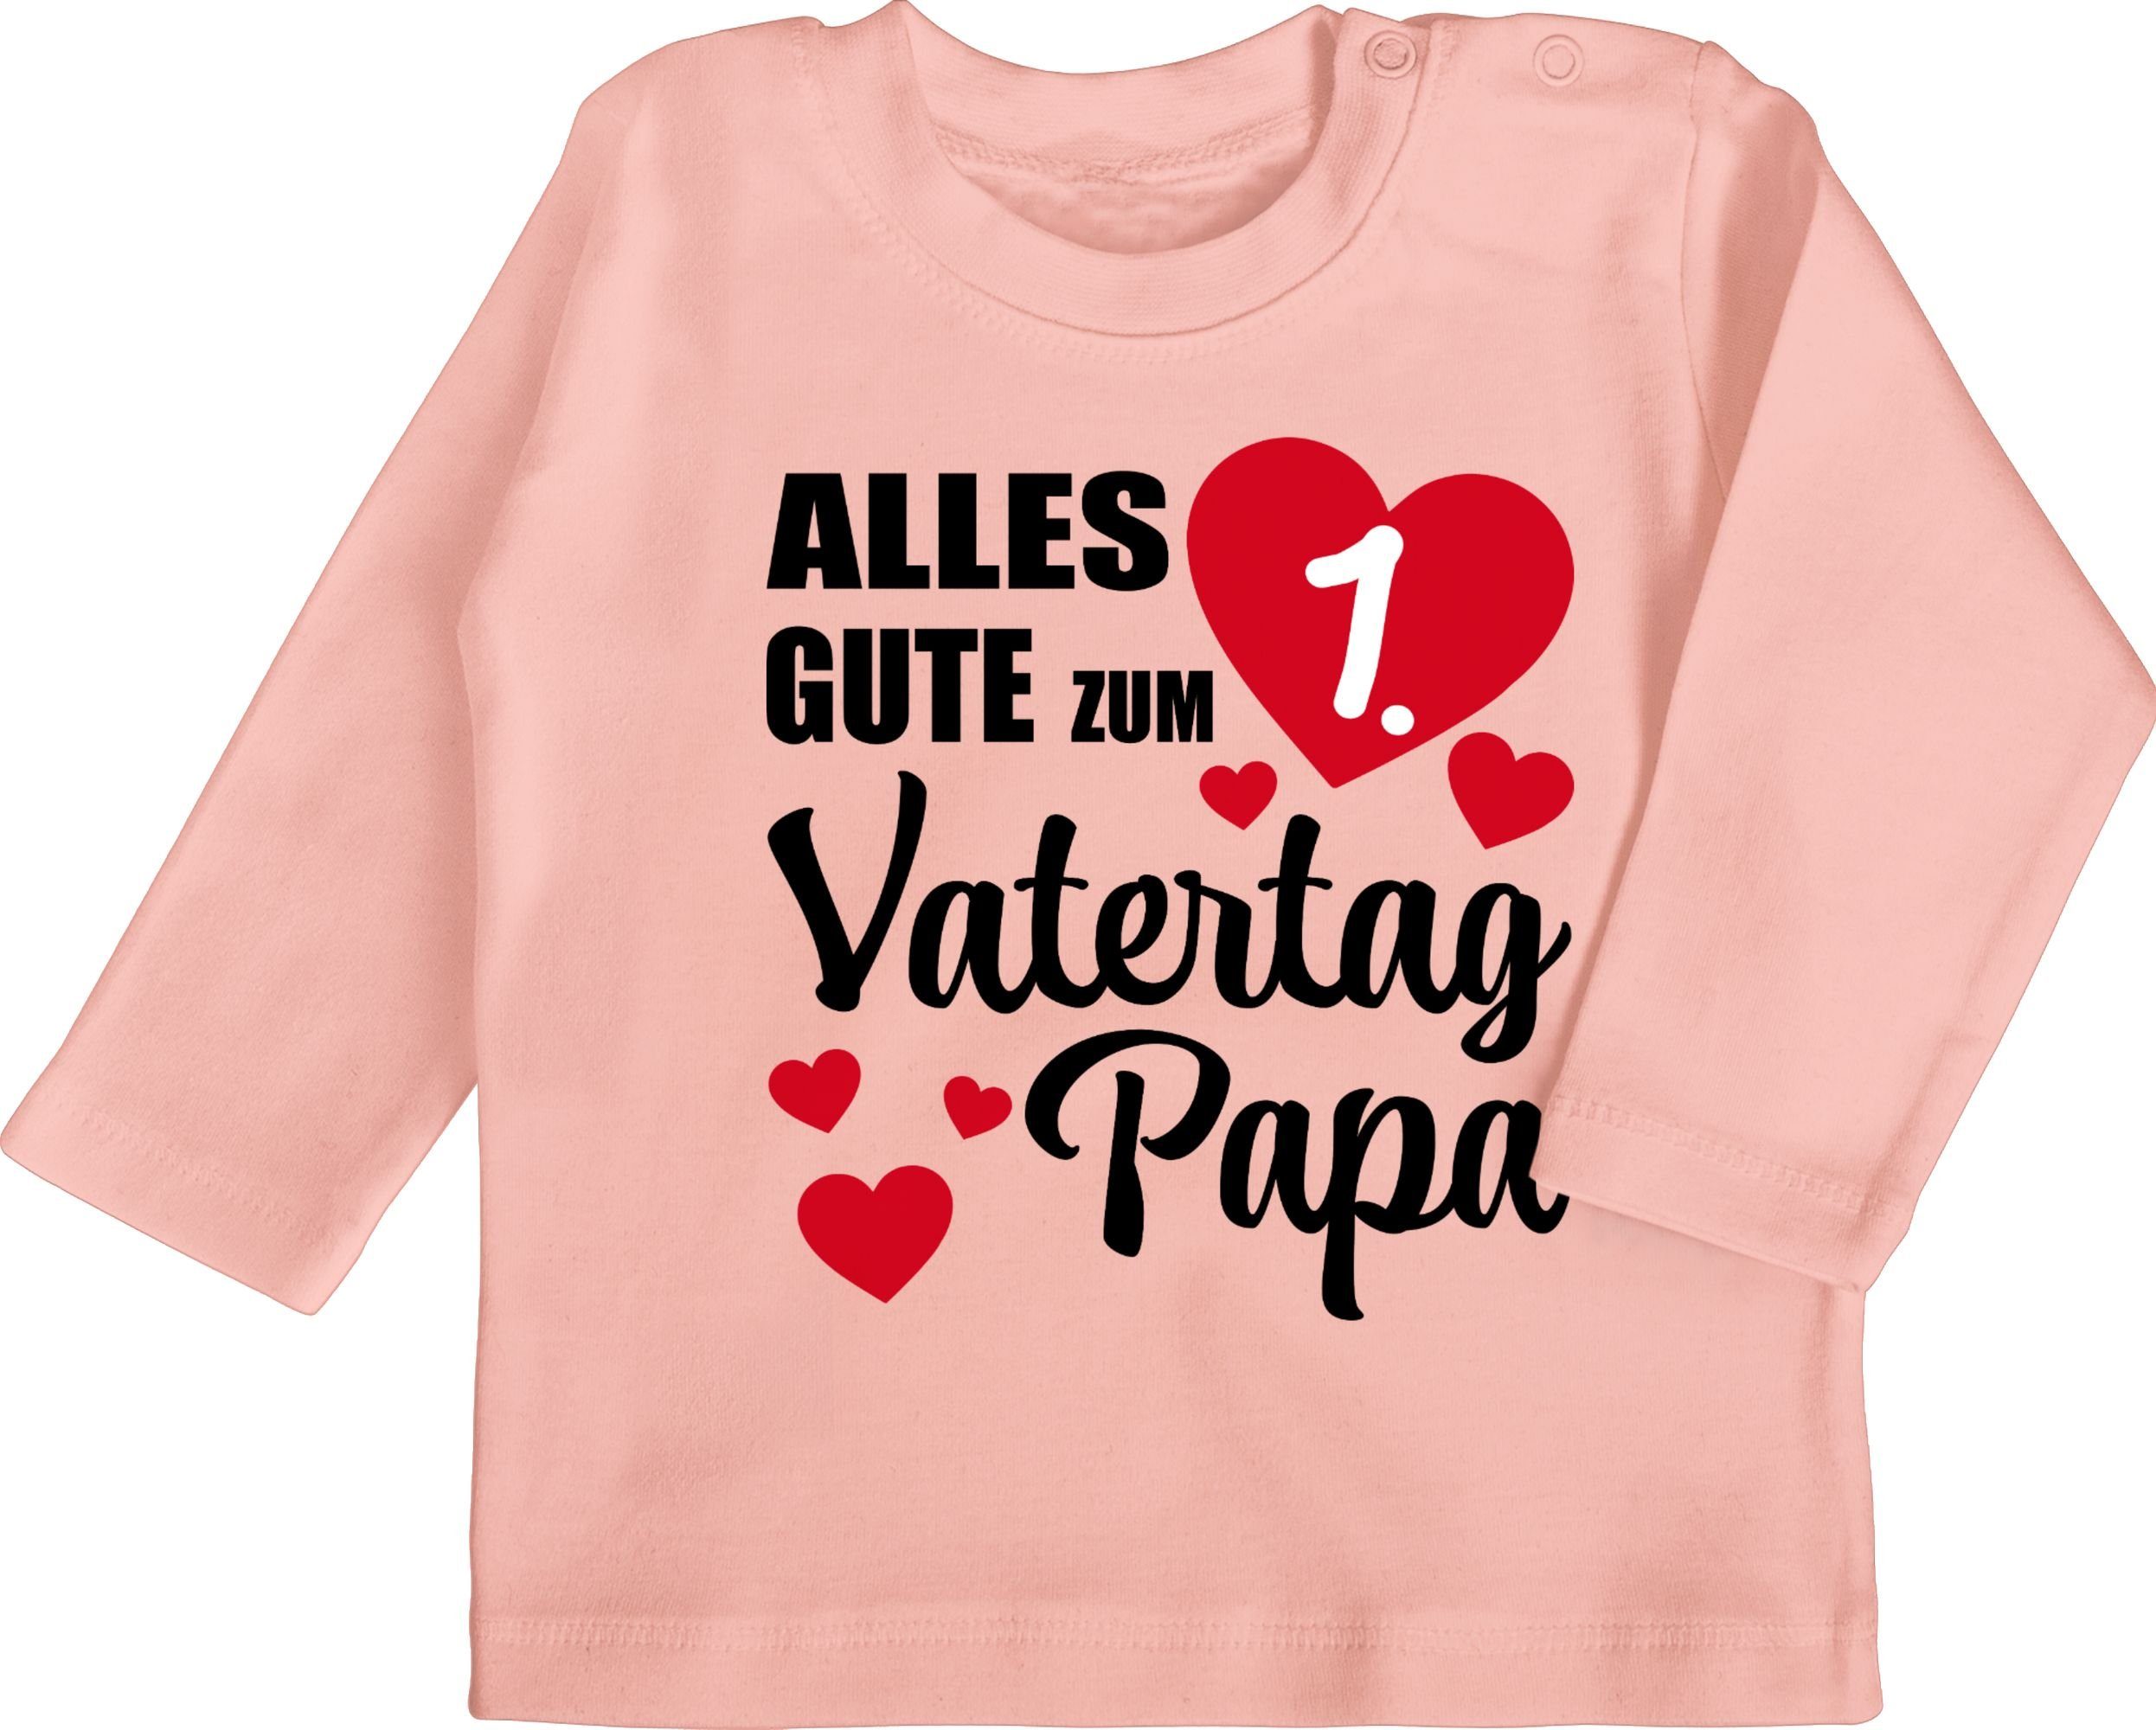 T-Shirt Vatertag gute Babyrosa 1. - Shirtracer Geschenk Vatertag Baby Papa zum 2 Alles ersten Vatertag